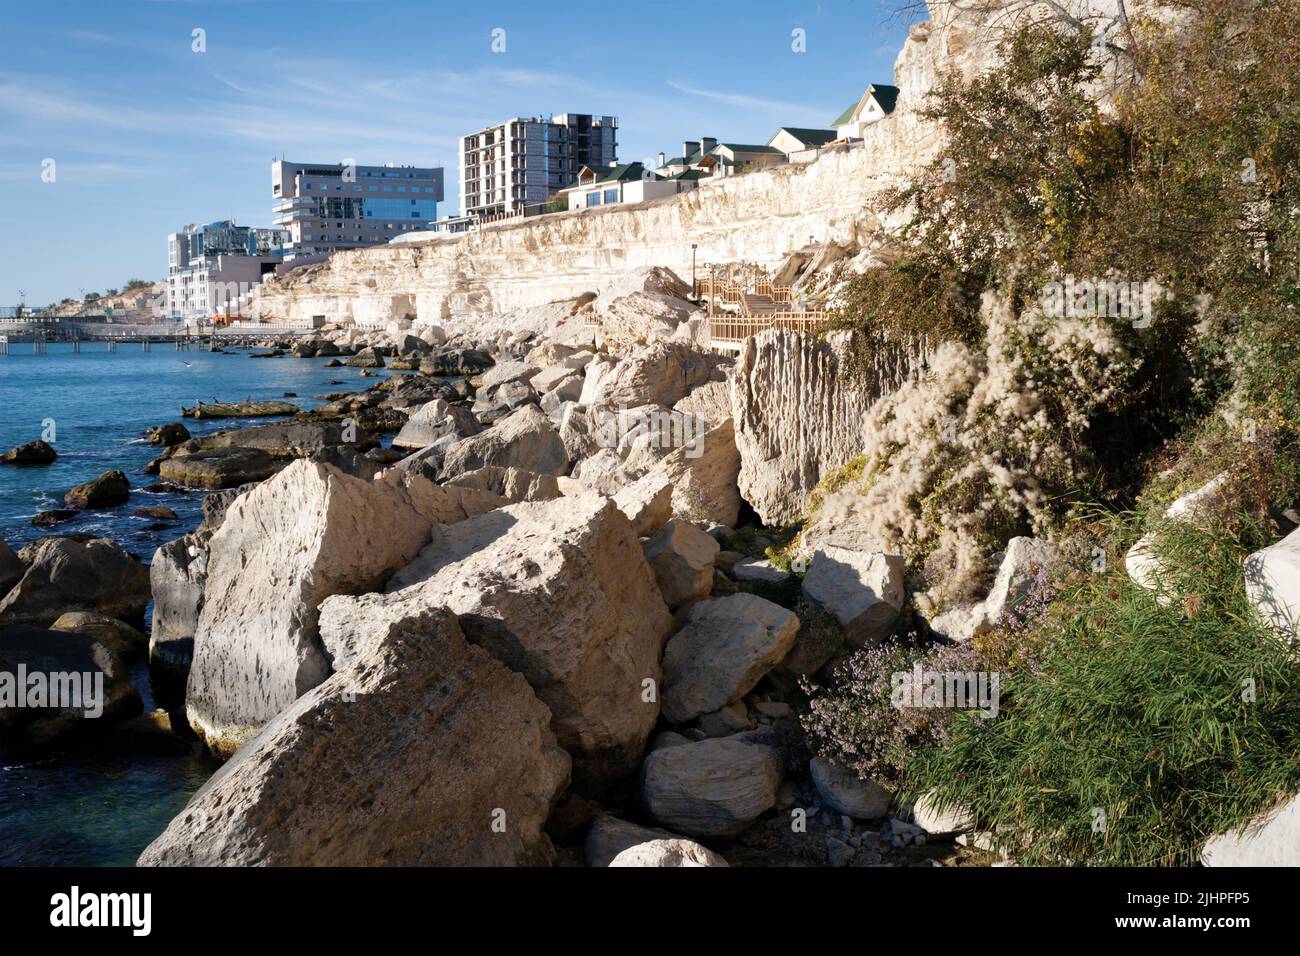 Rocks on the shore of the Caspian Sea. 10 October 2019 year. Aktau city. Kazakhstan Mangistau region. Stock Photo